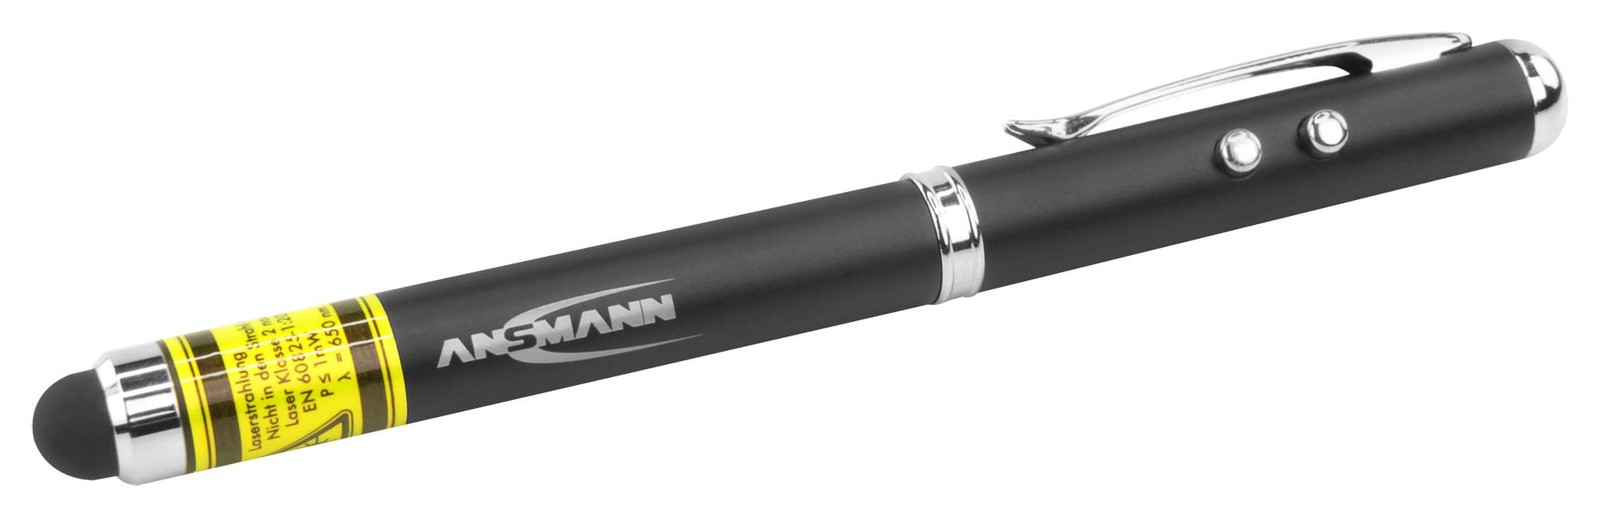 Ansmann 1600-0271 Touch Screen Stylus 4-In-1, Led Penlight